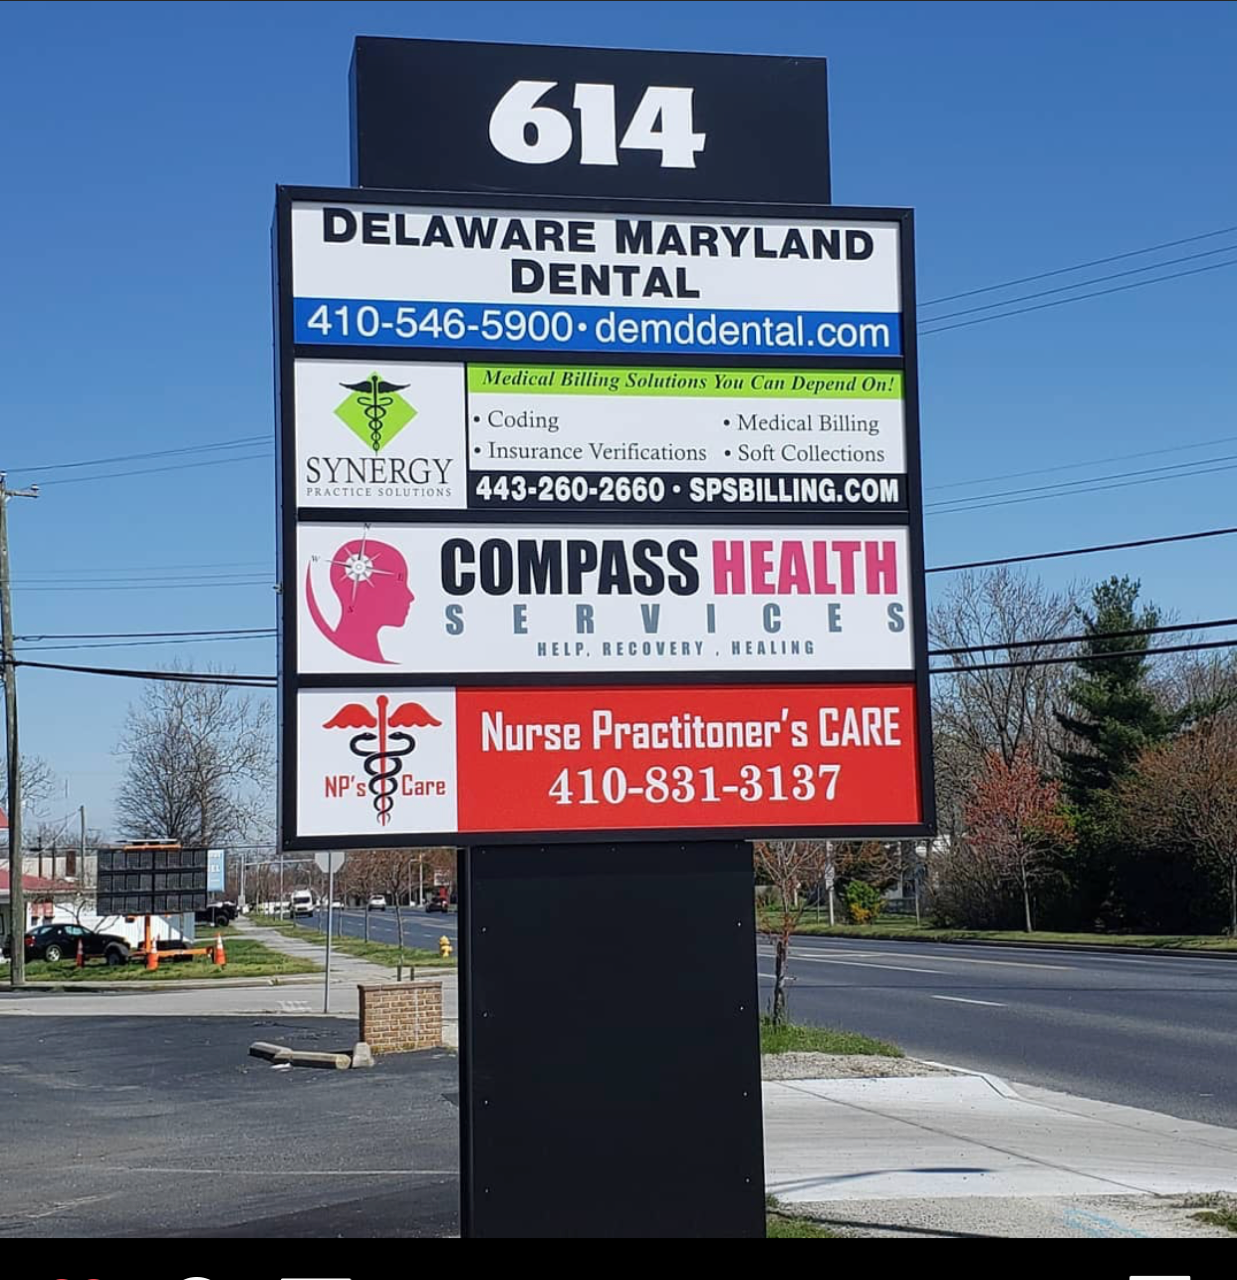 Delaware Maryland Dental